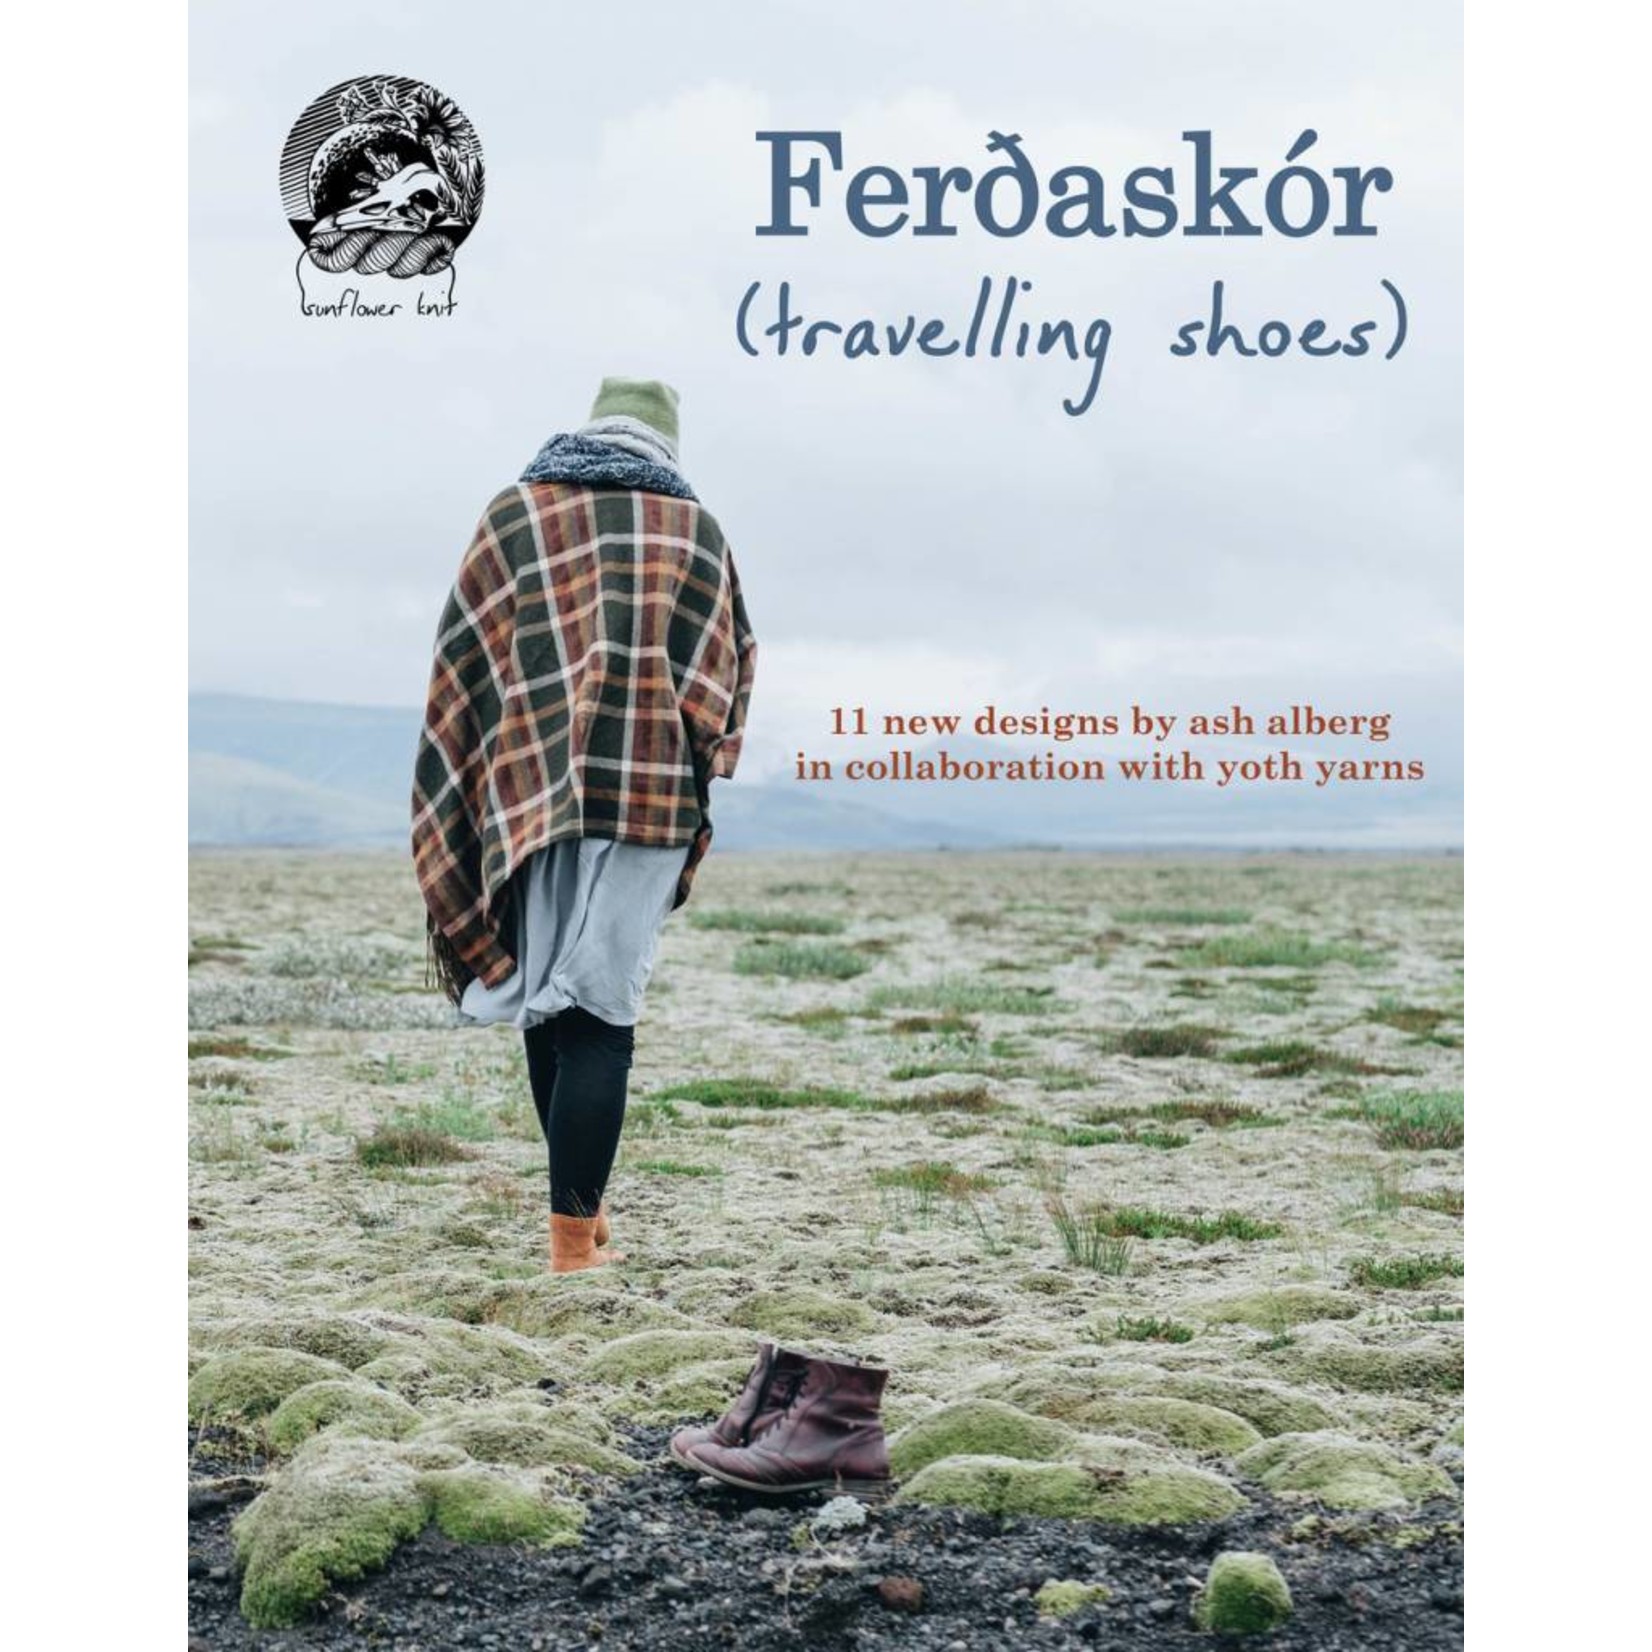 Ferdaskor (Travelling Shoes) by Ash Alberg